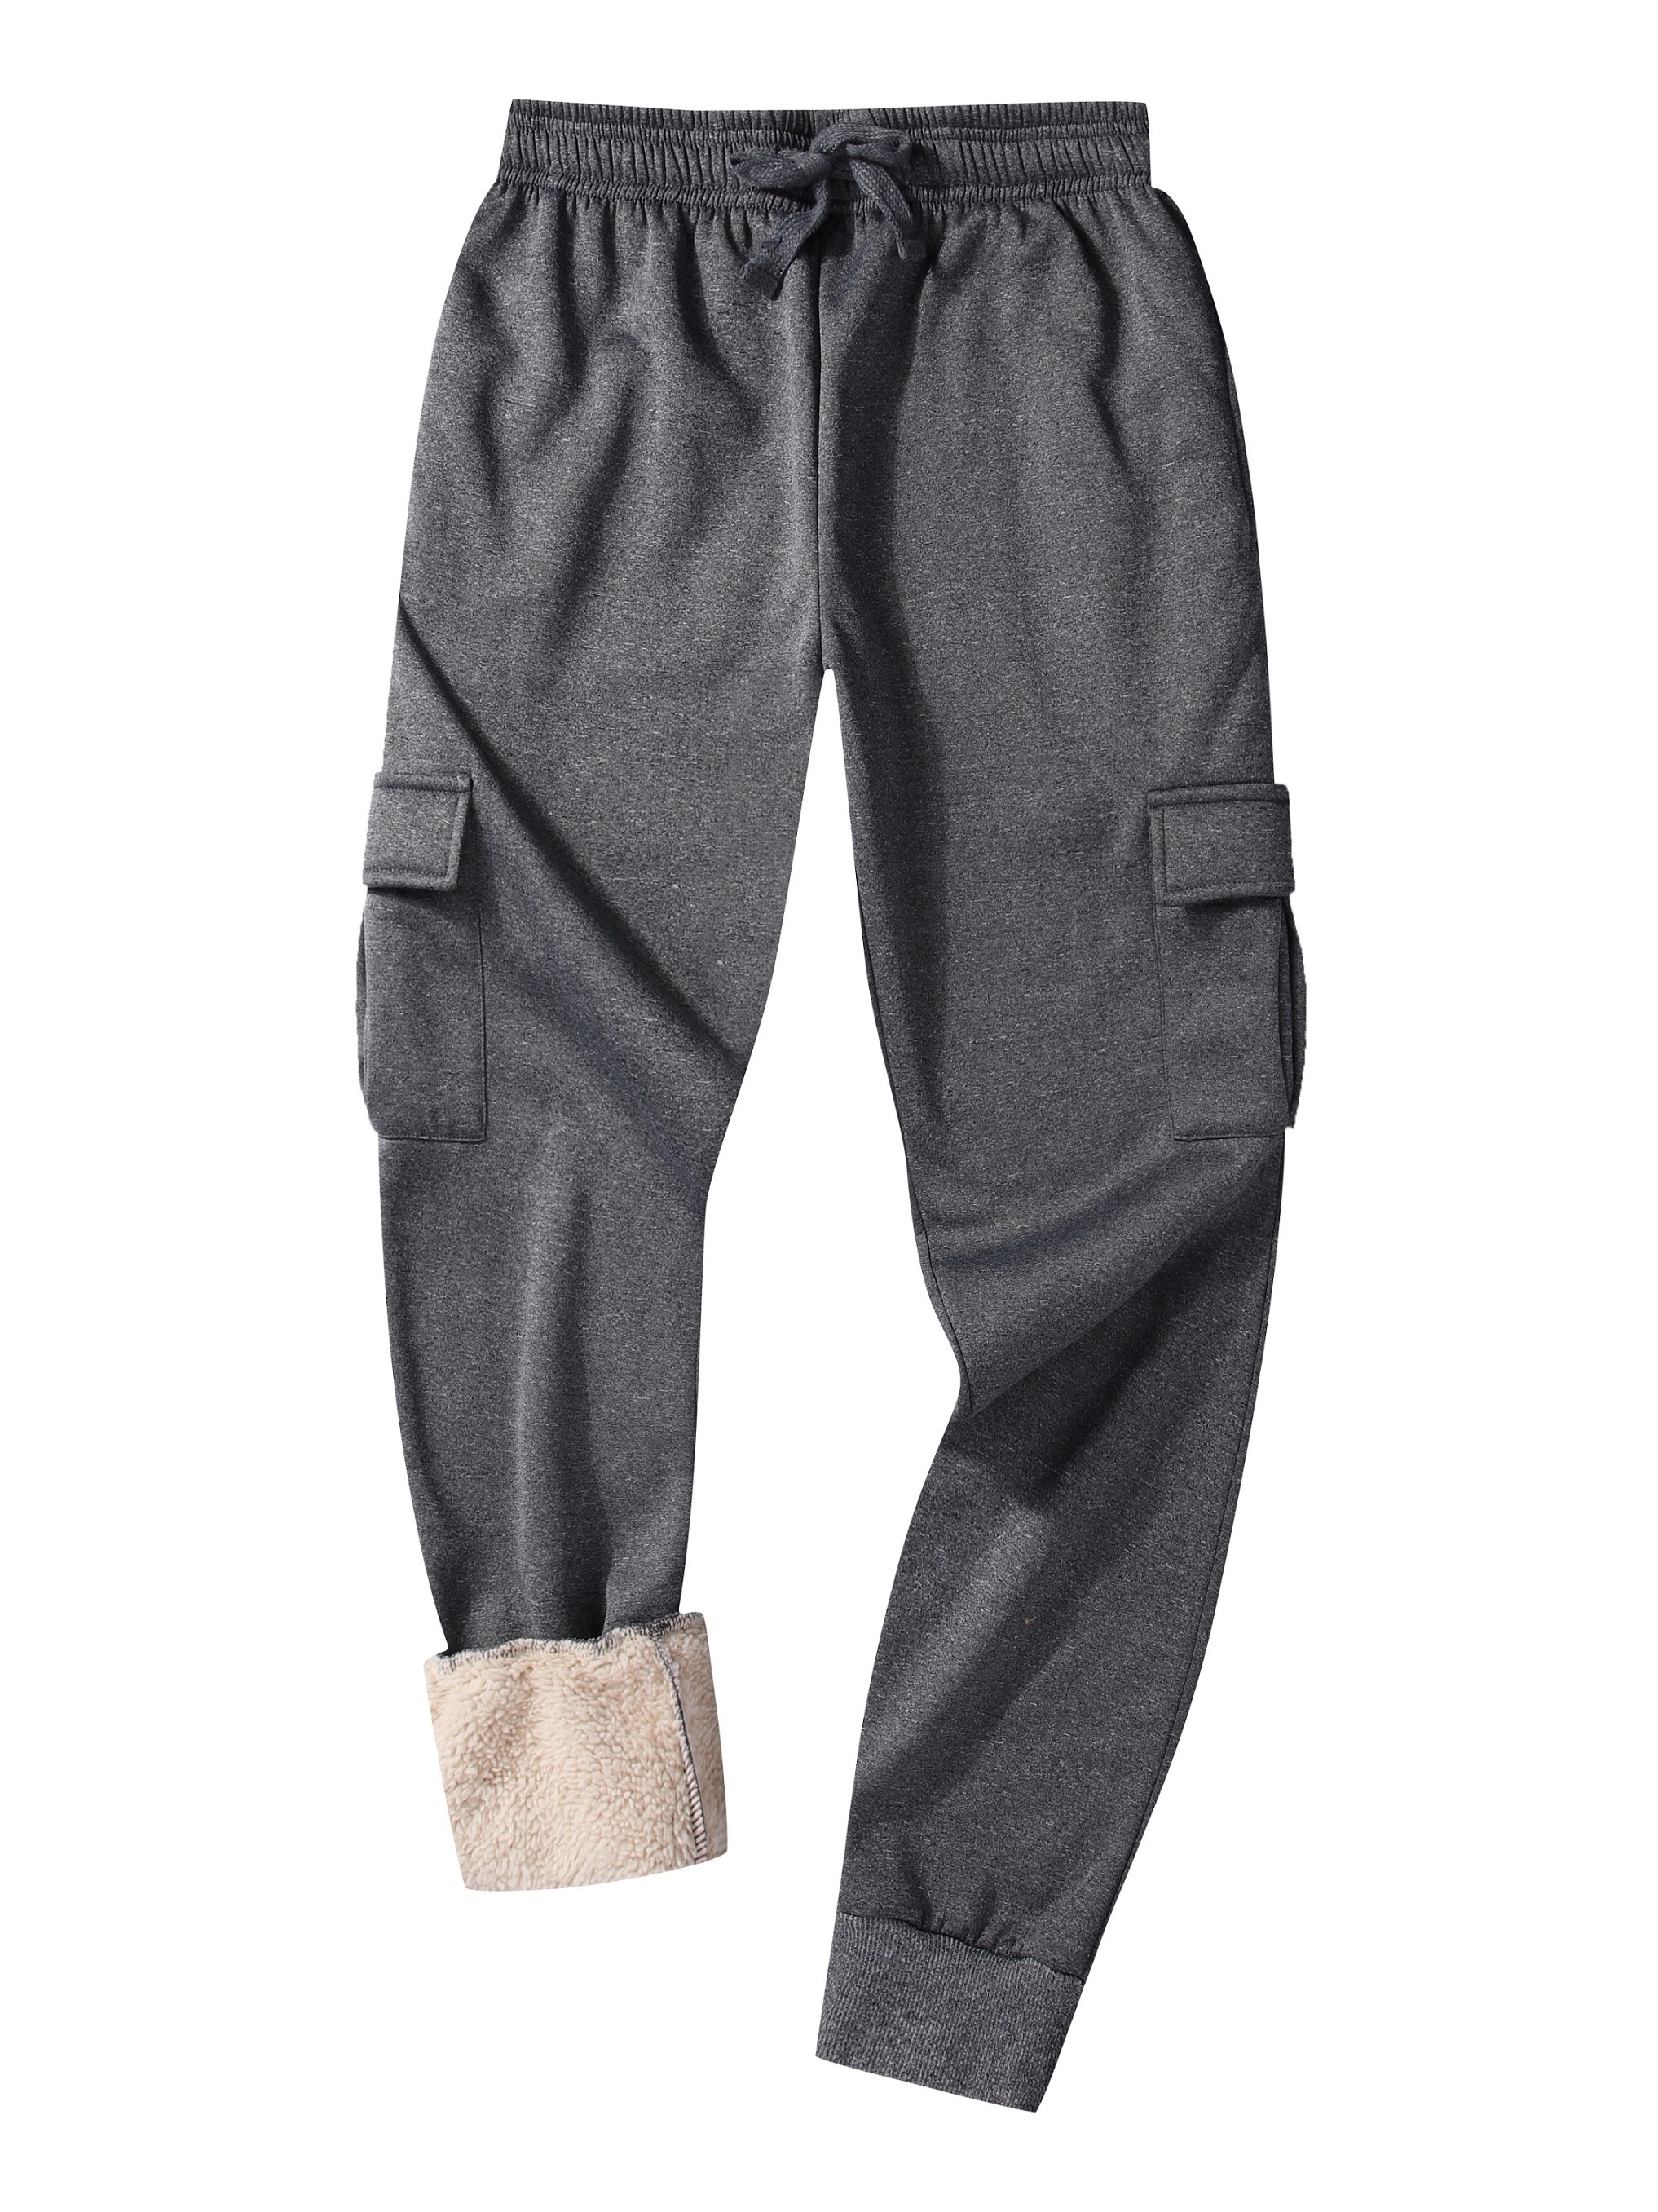 Men's Warm Sherpa Lined Sweatpants Athletic Jogger Harem Pants For Winter